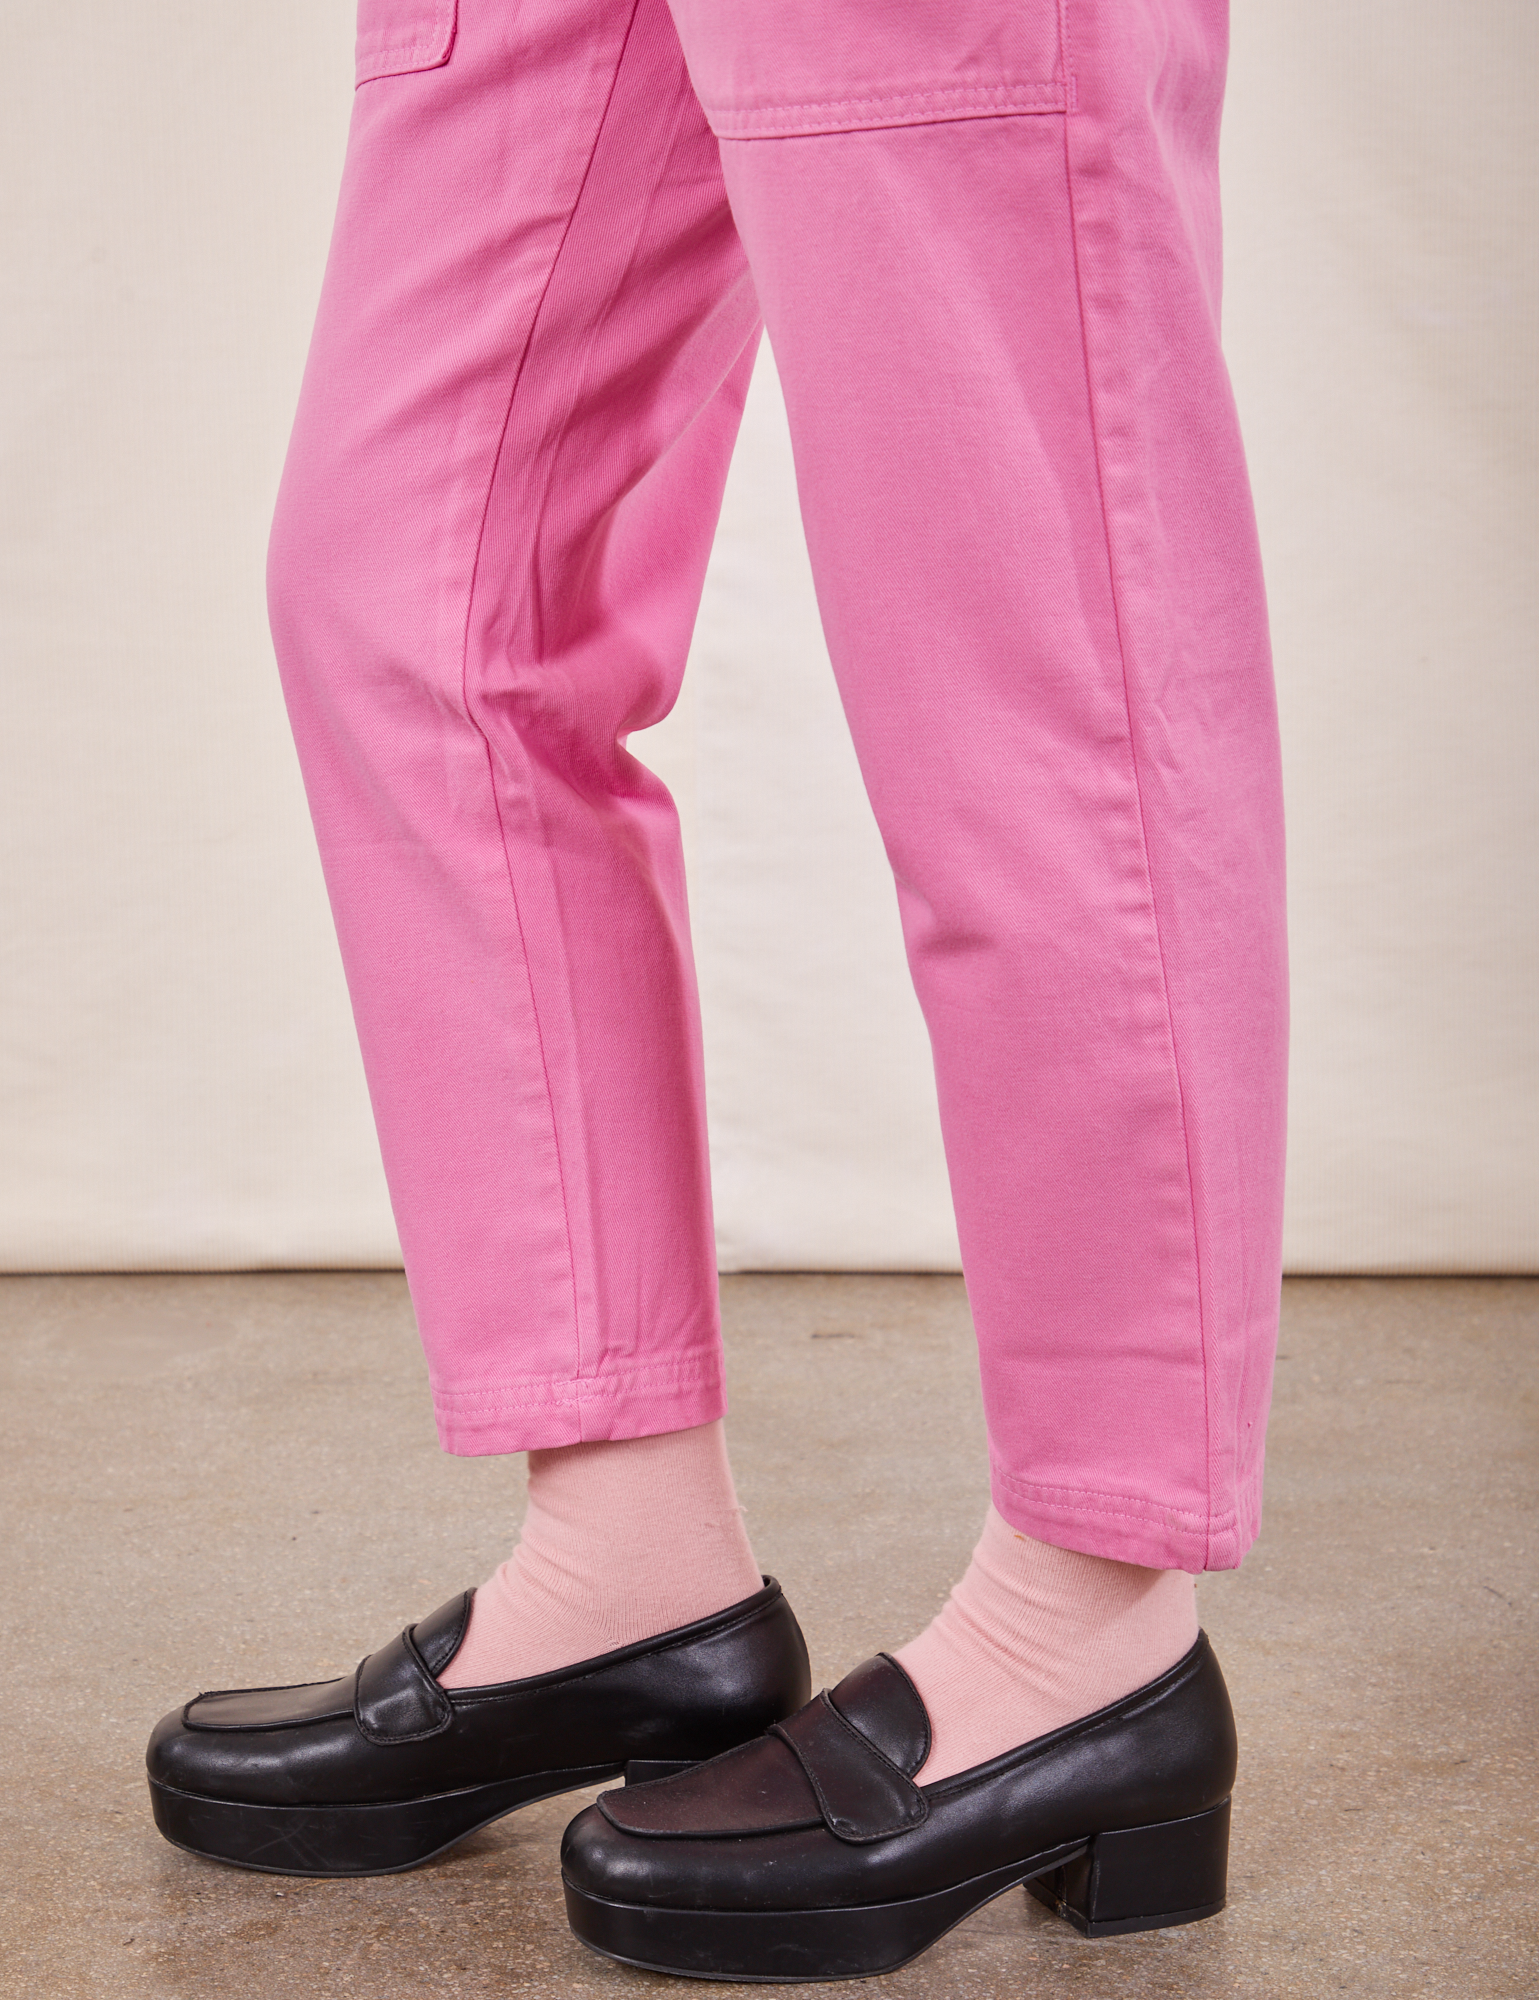 Petite Pencil Pants in Bubblegum Pink pant leg close up on Hana